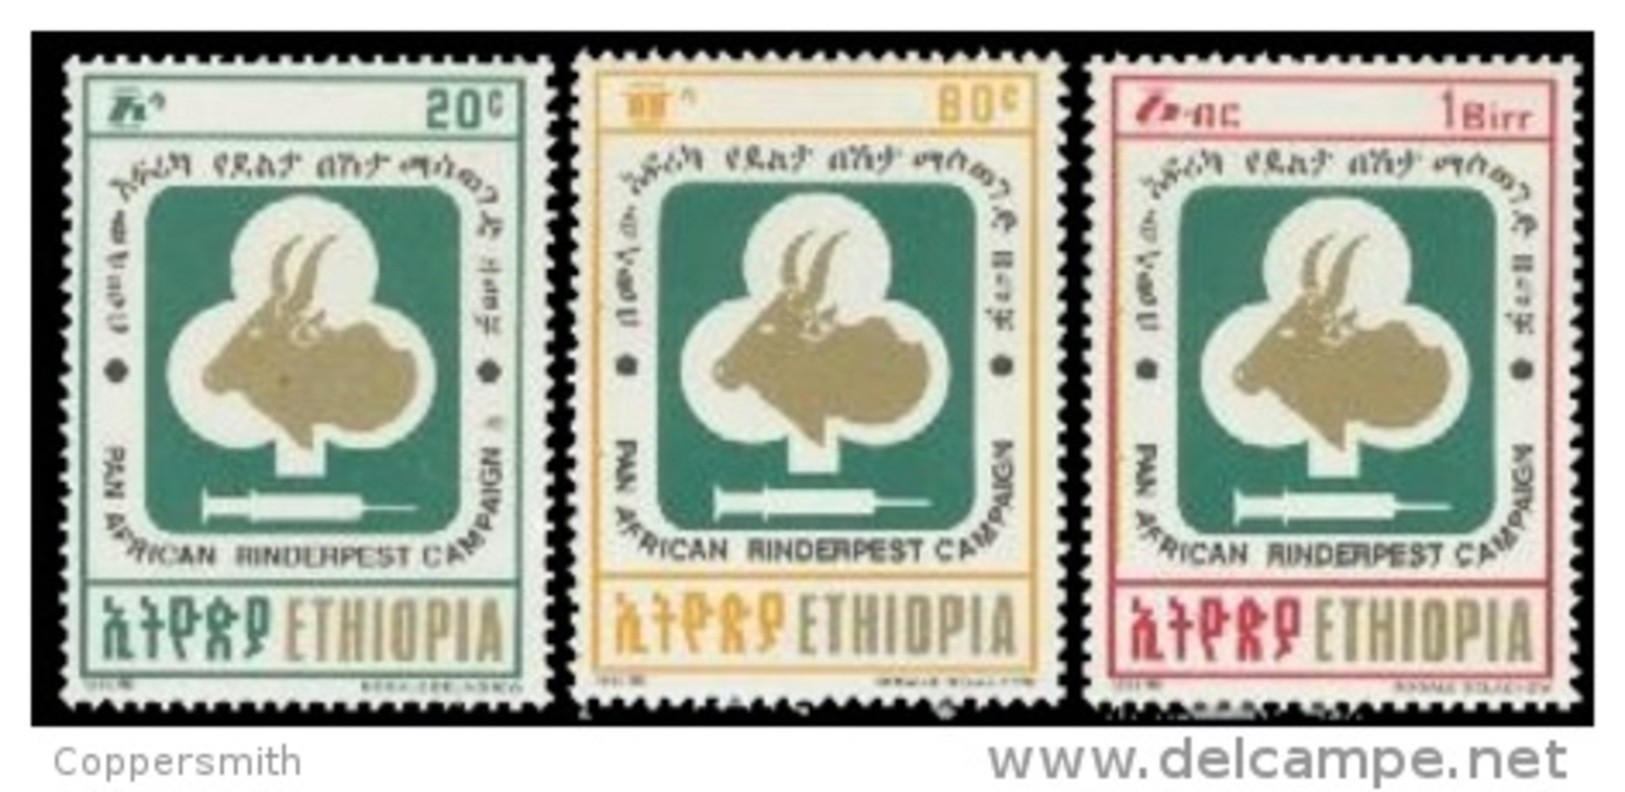 (342) Ethiopia / Ethiopie  Medicine / Animals / Tiere / Dieren / Rinderpest / 1992   ** / Mnh  Michel 1420-22 - Ethiopia